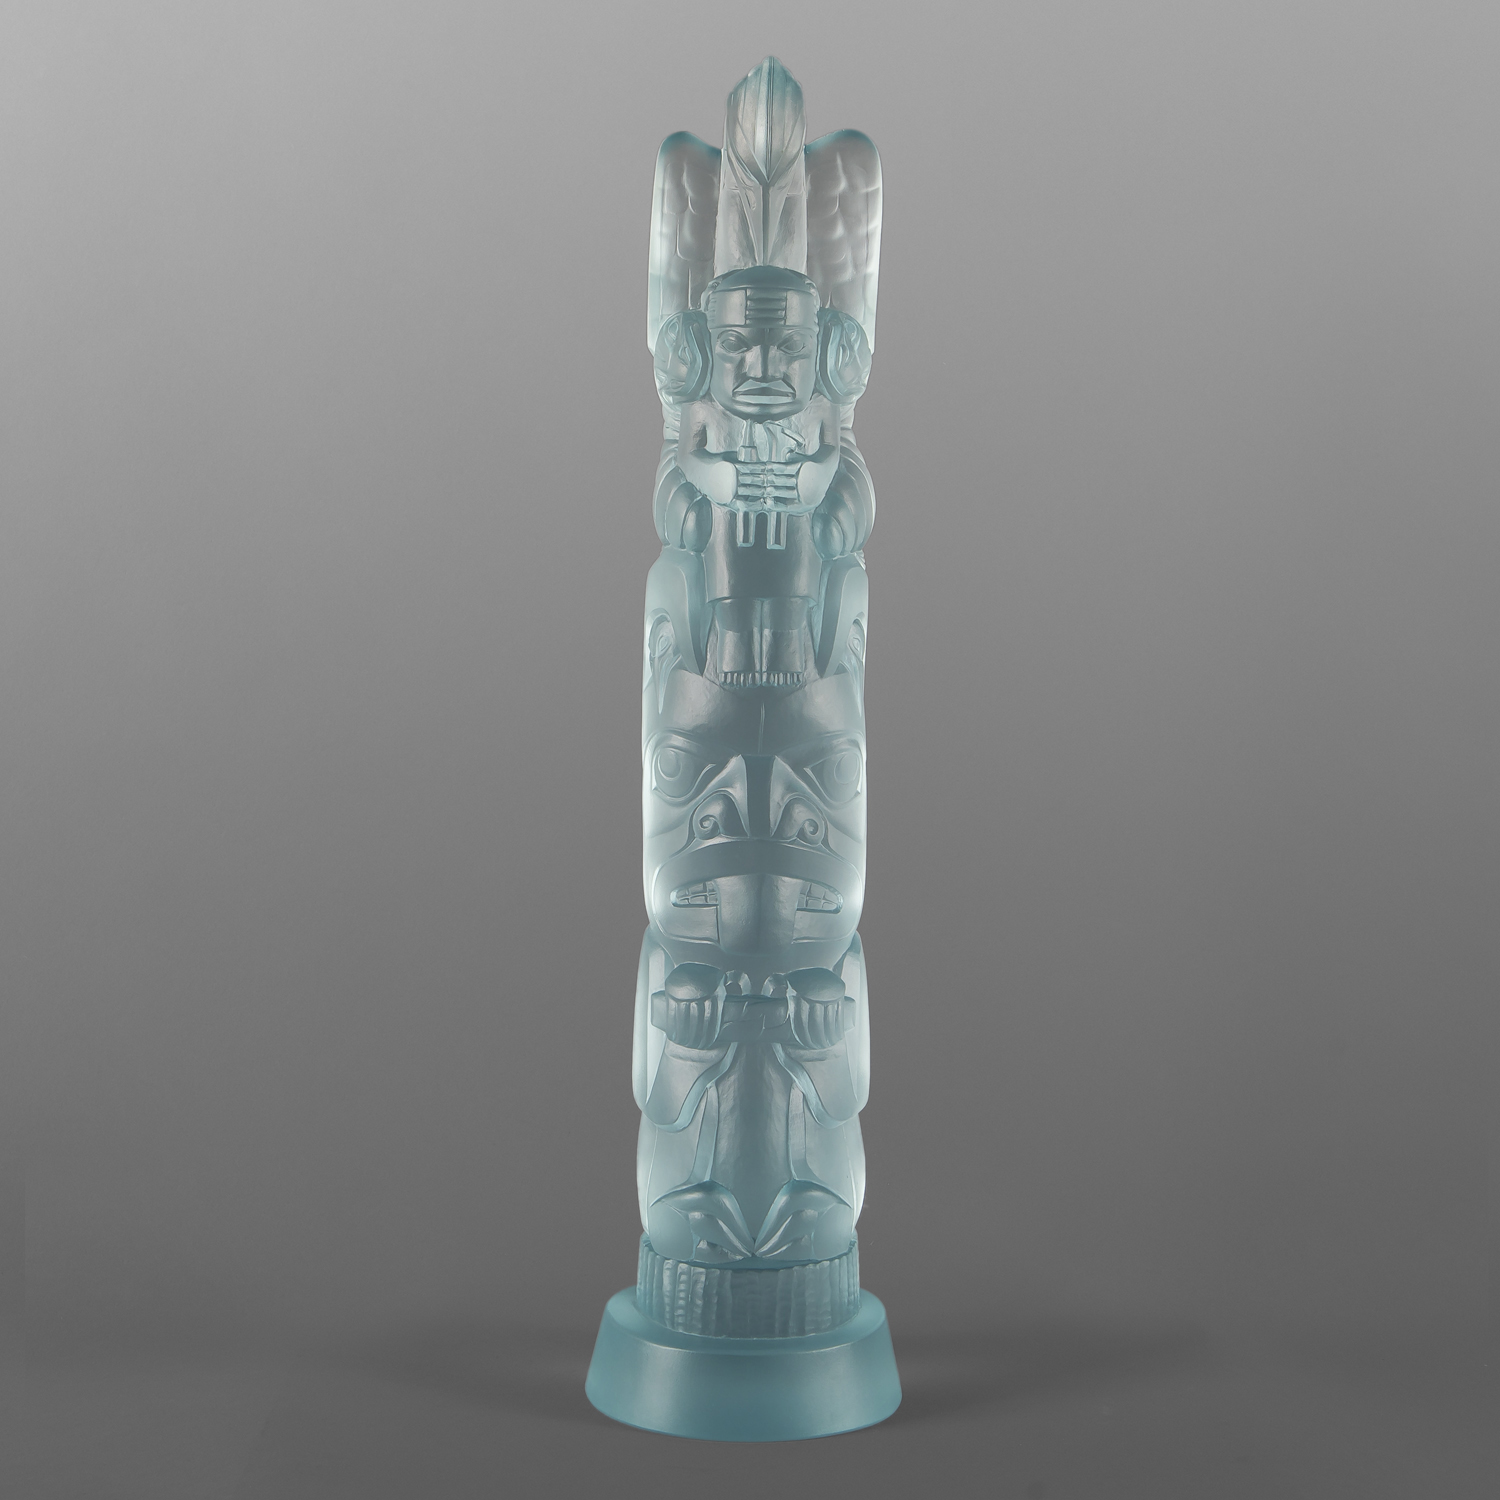 Woodcarver's Totem
Preston Singletary
Tlingit
Crystal
25" x 6" x 5"
$20,000